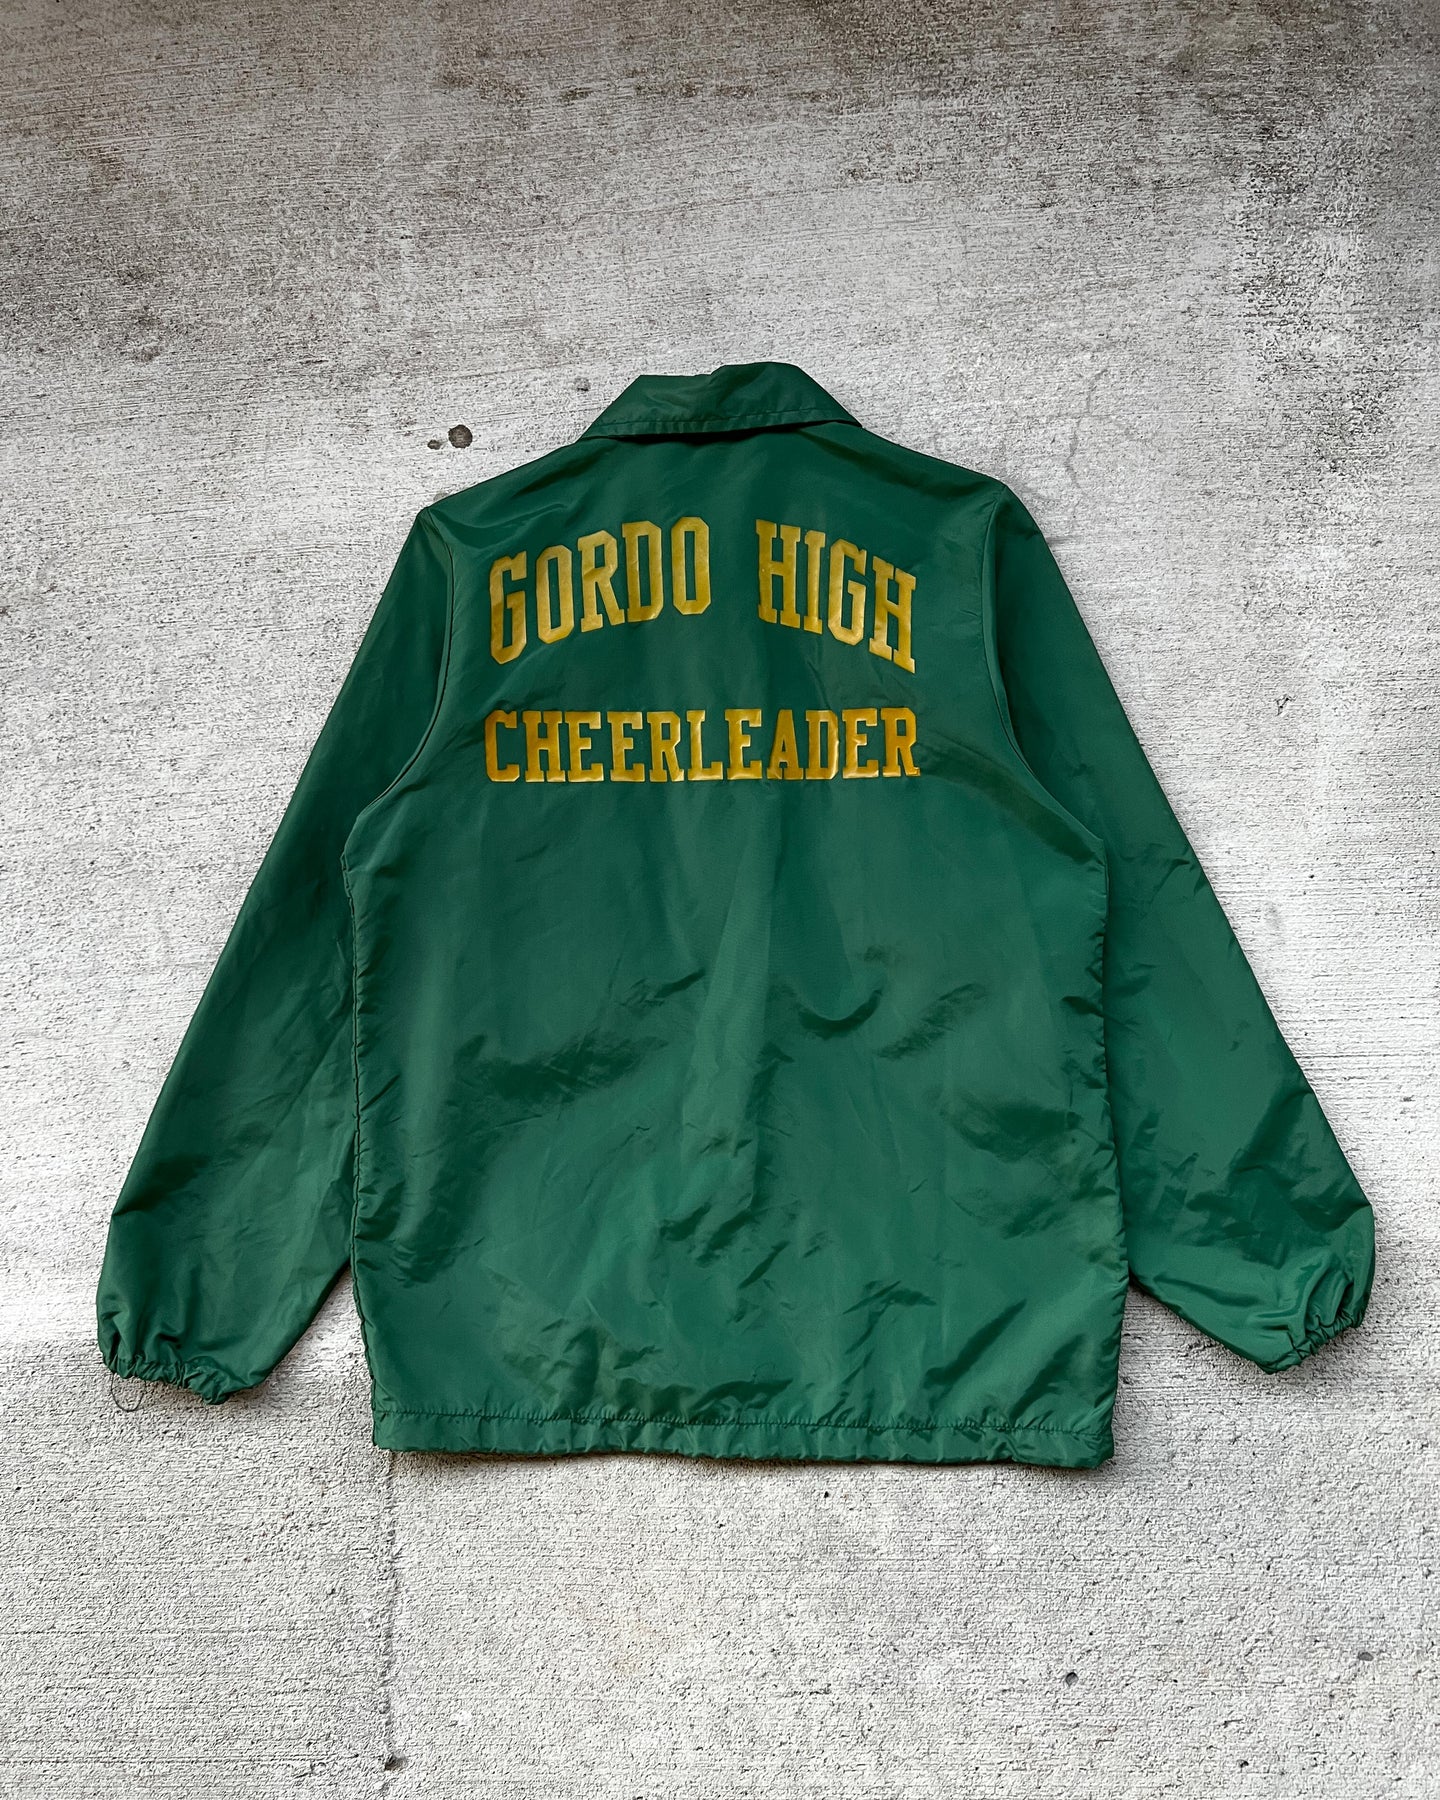 1970s Gordo High Cheerleader Coach Jacket - Size Large